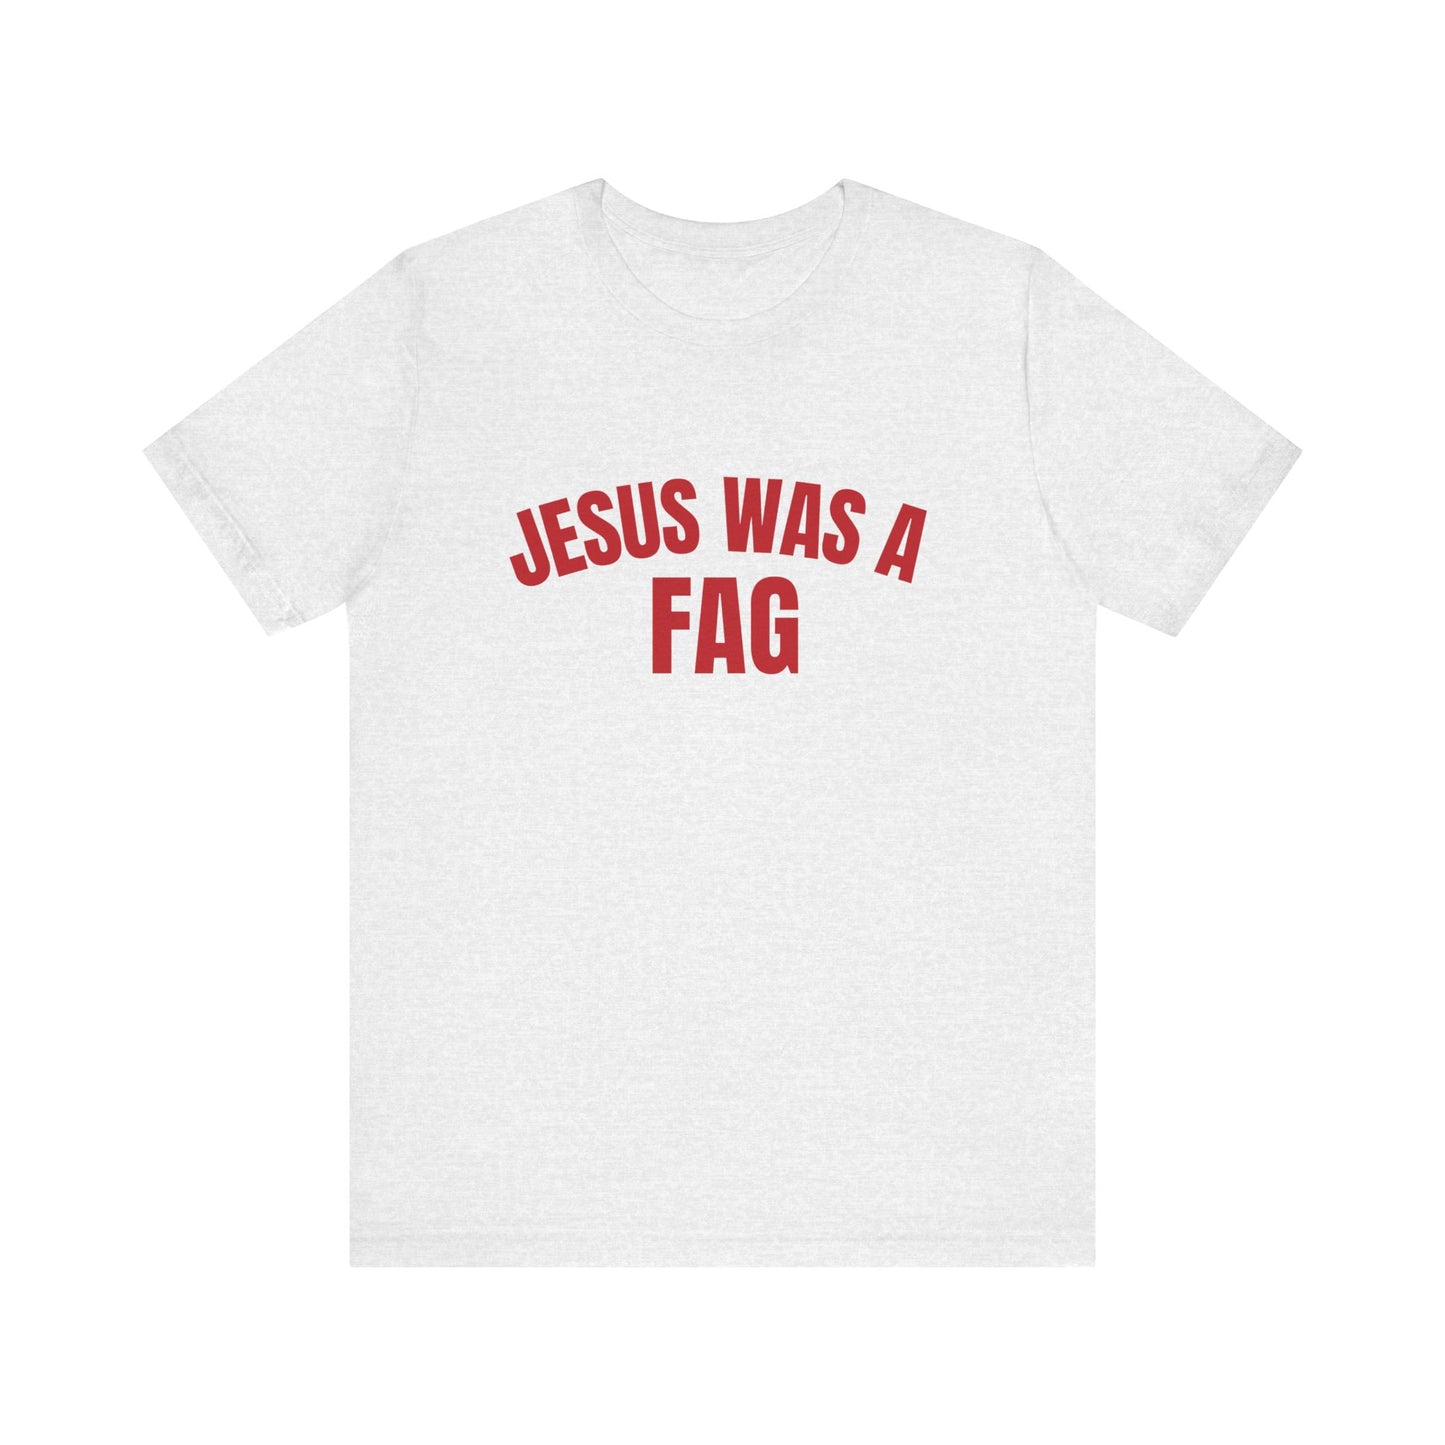 Jesus Was A Fag - Funny Unisex T-Shirt, Funny LGBTQ Pride Tee